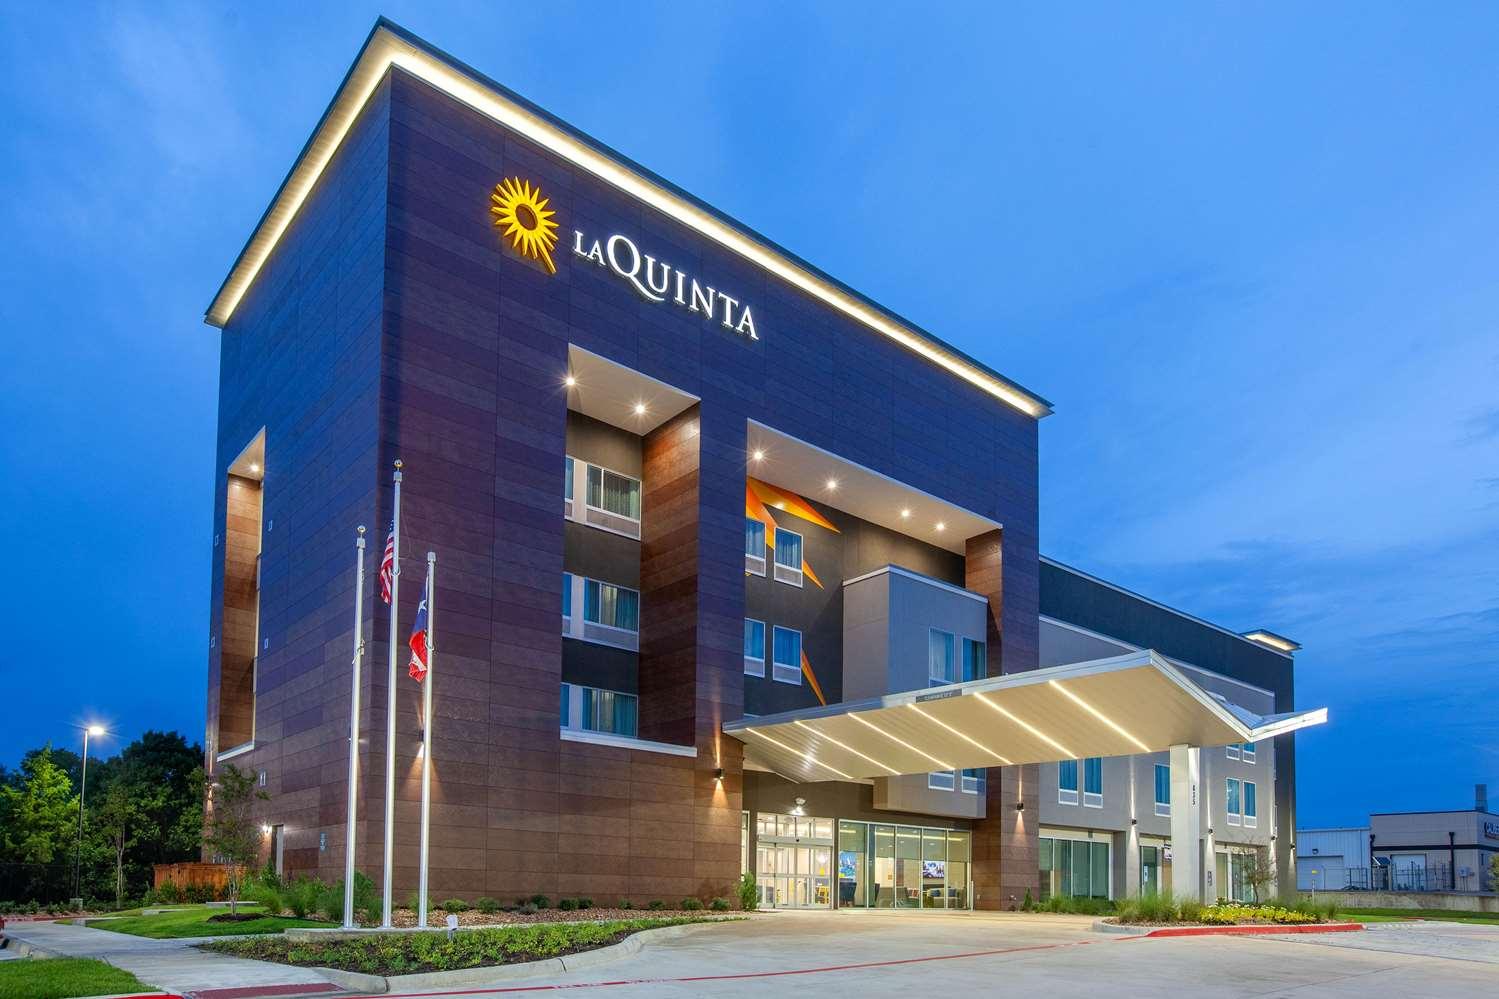 La Quinta Inn & Suites by Wyndham Dallas Duncanville in Duncanville, TX